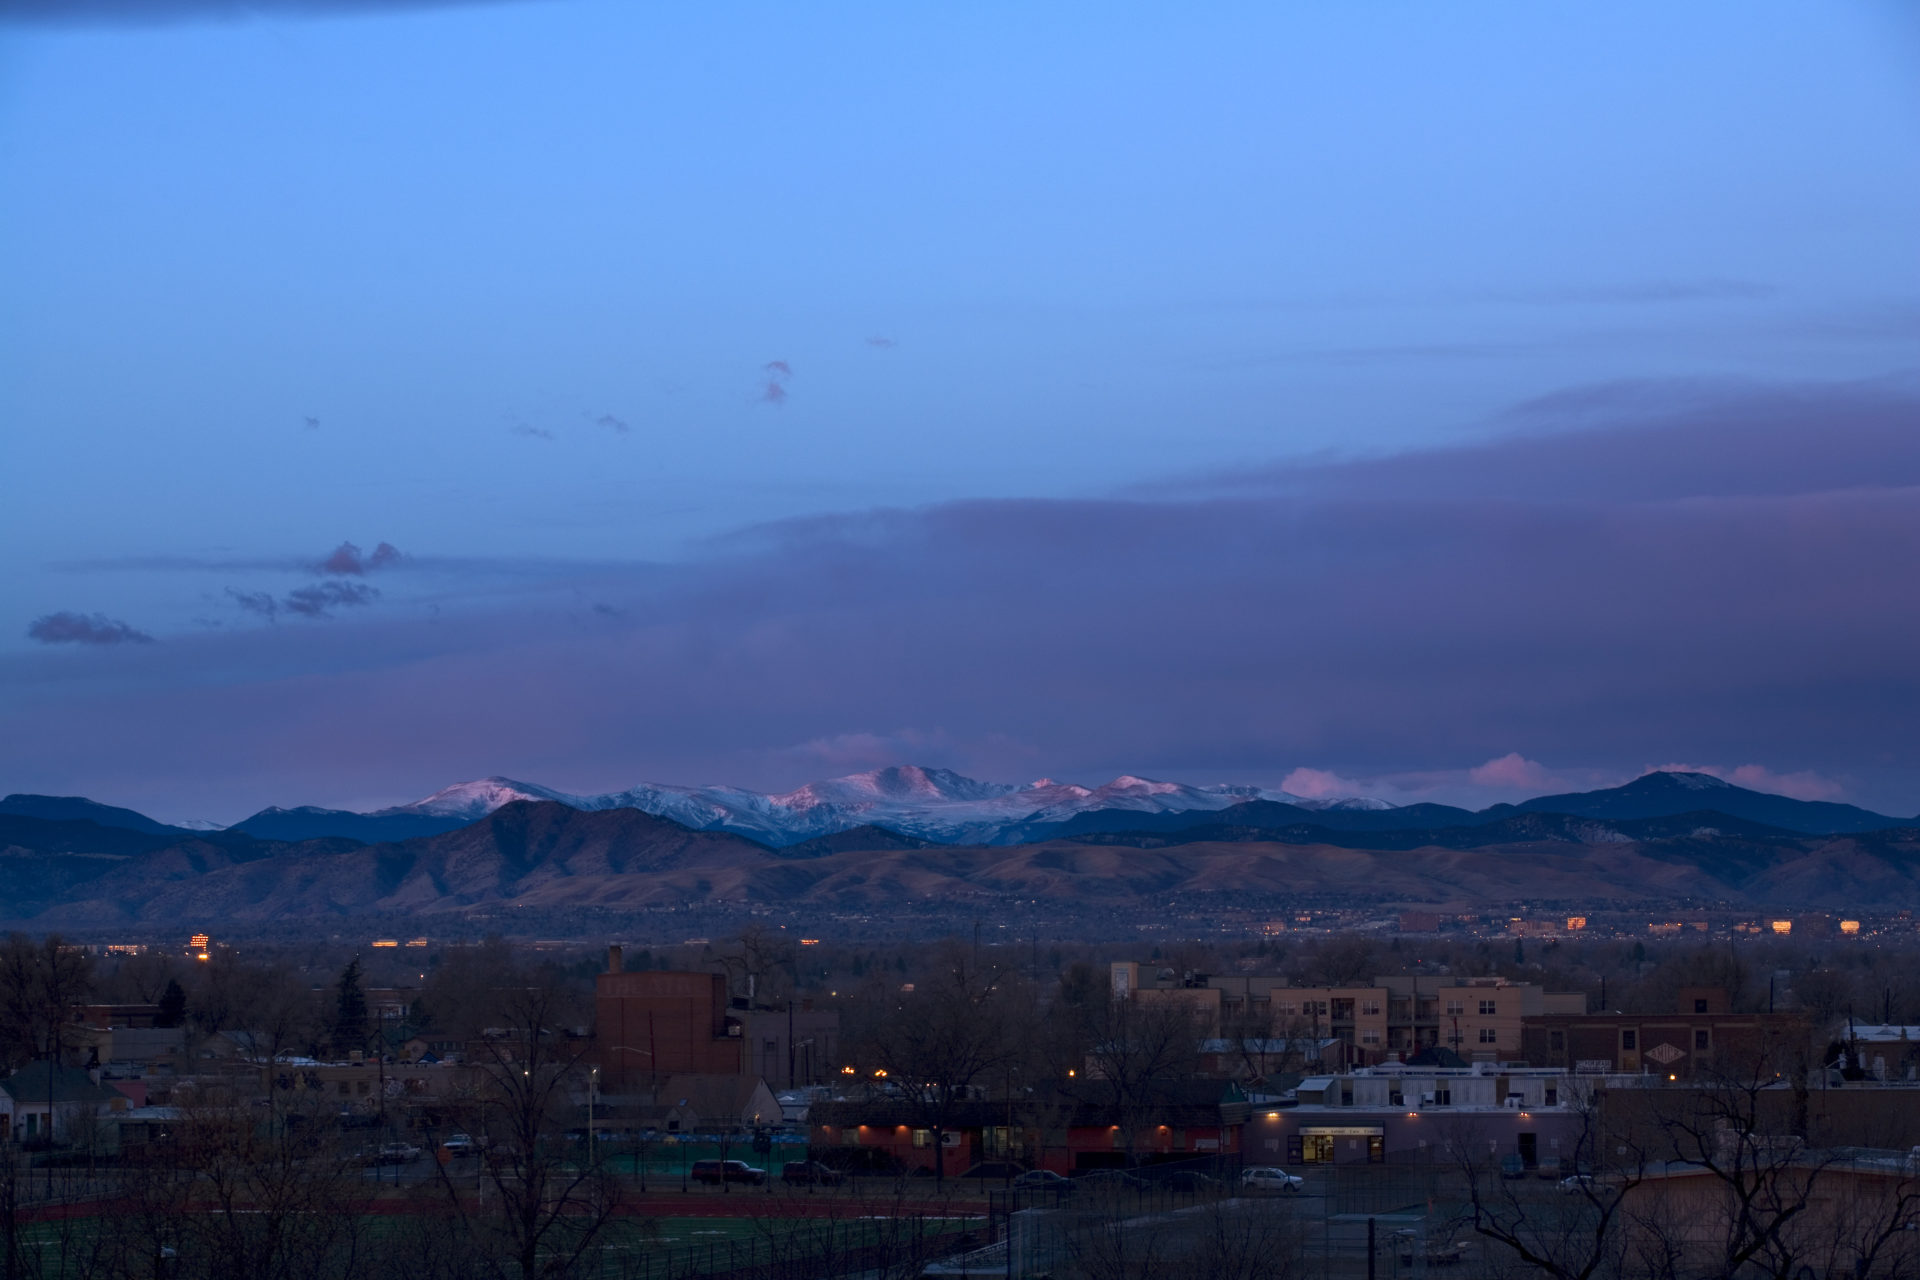 Mount Evans sunrise - December 1, 2010